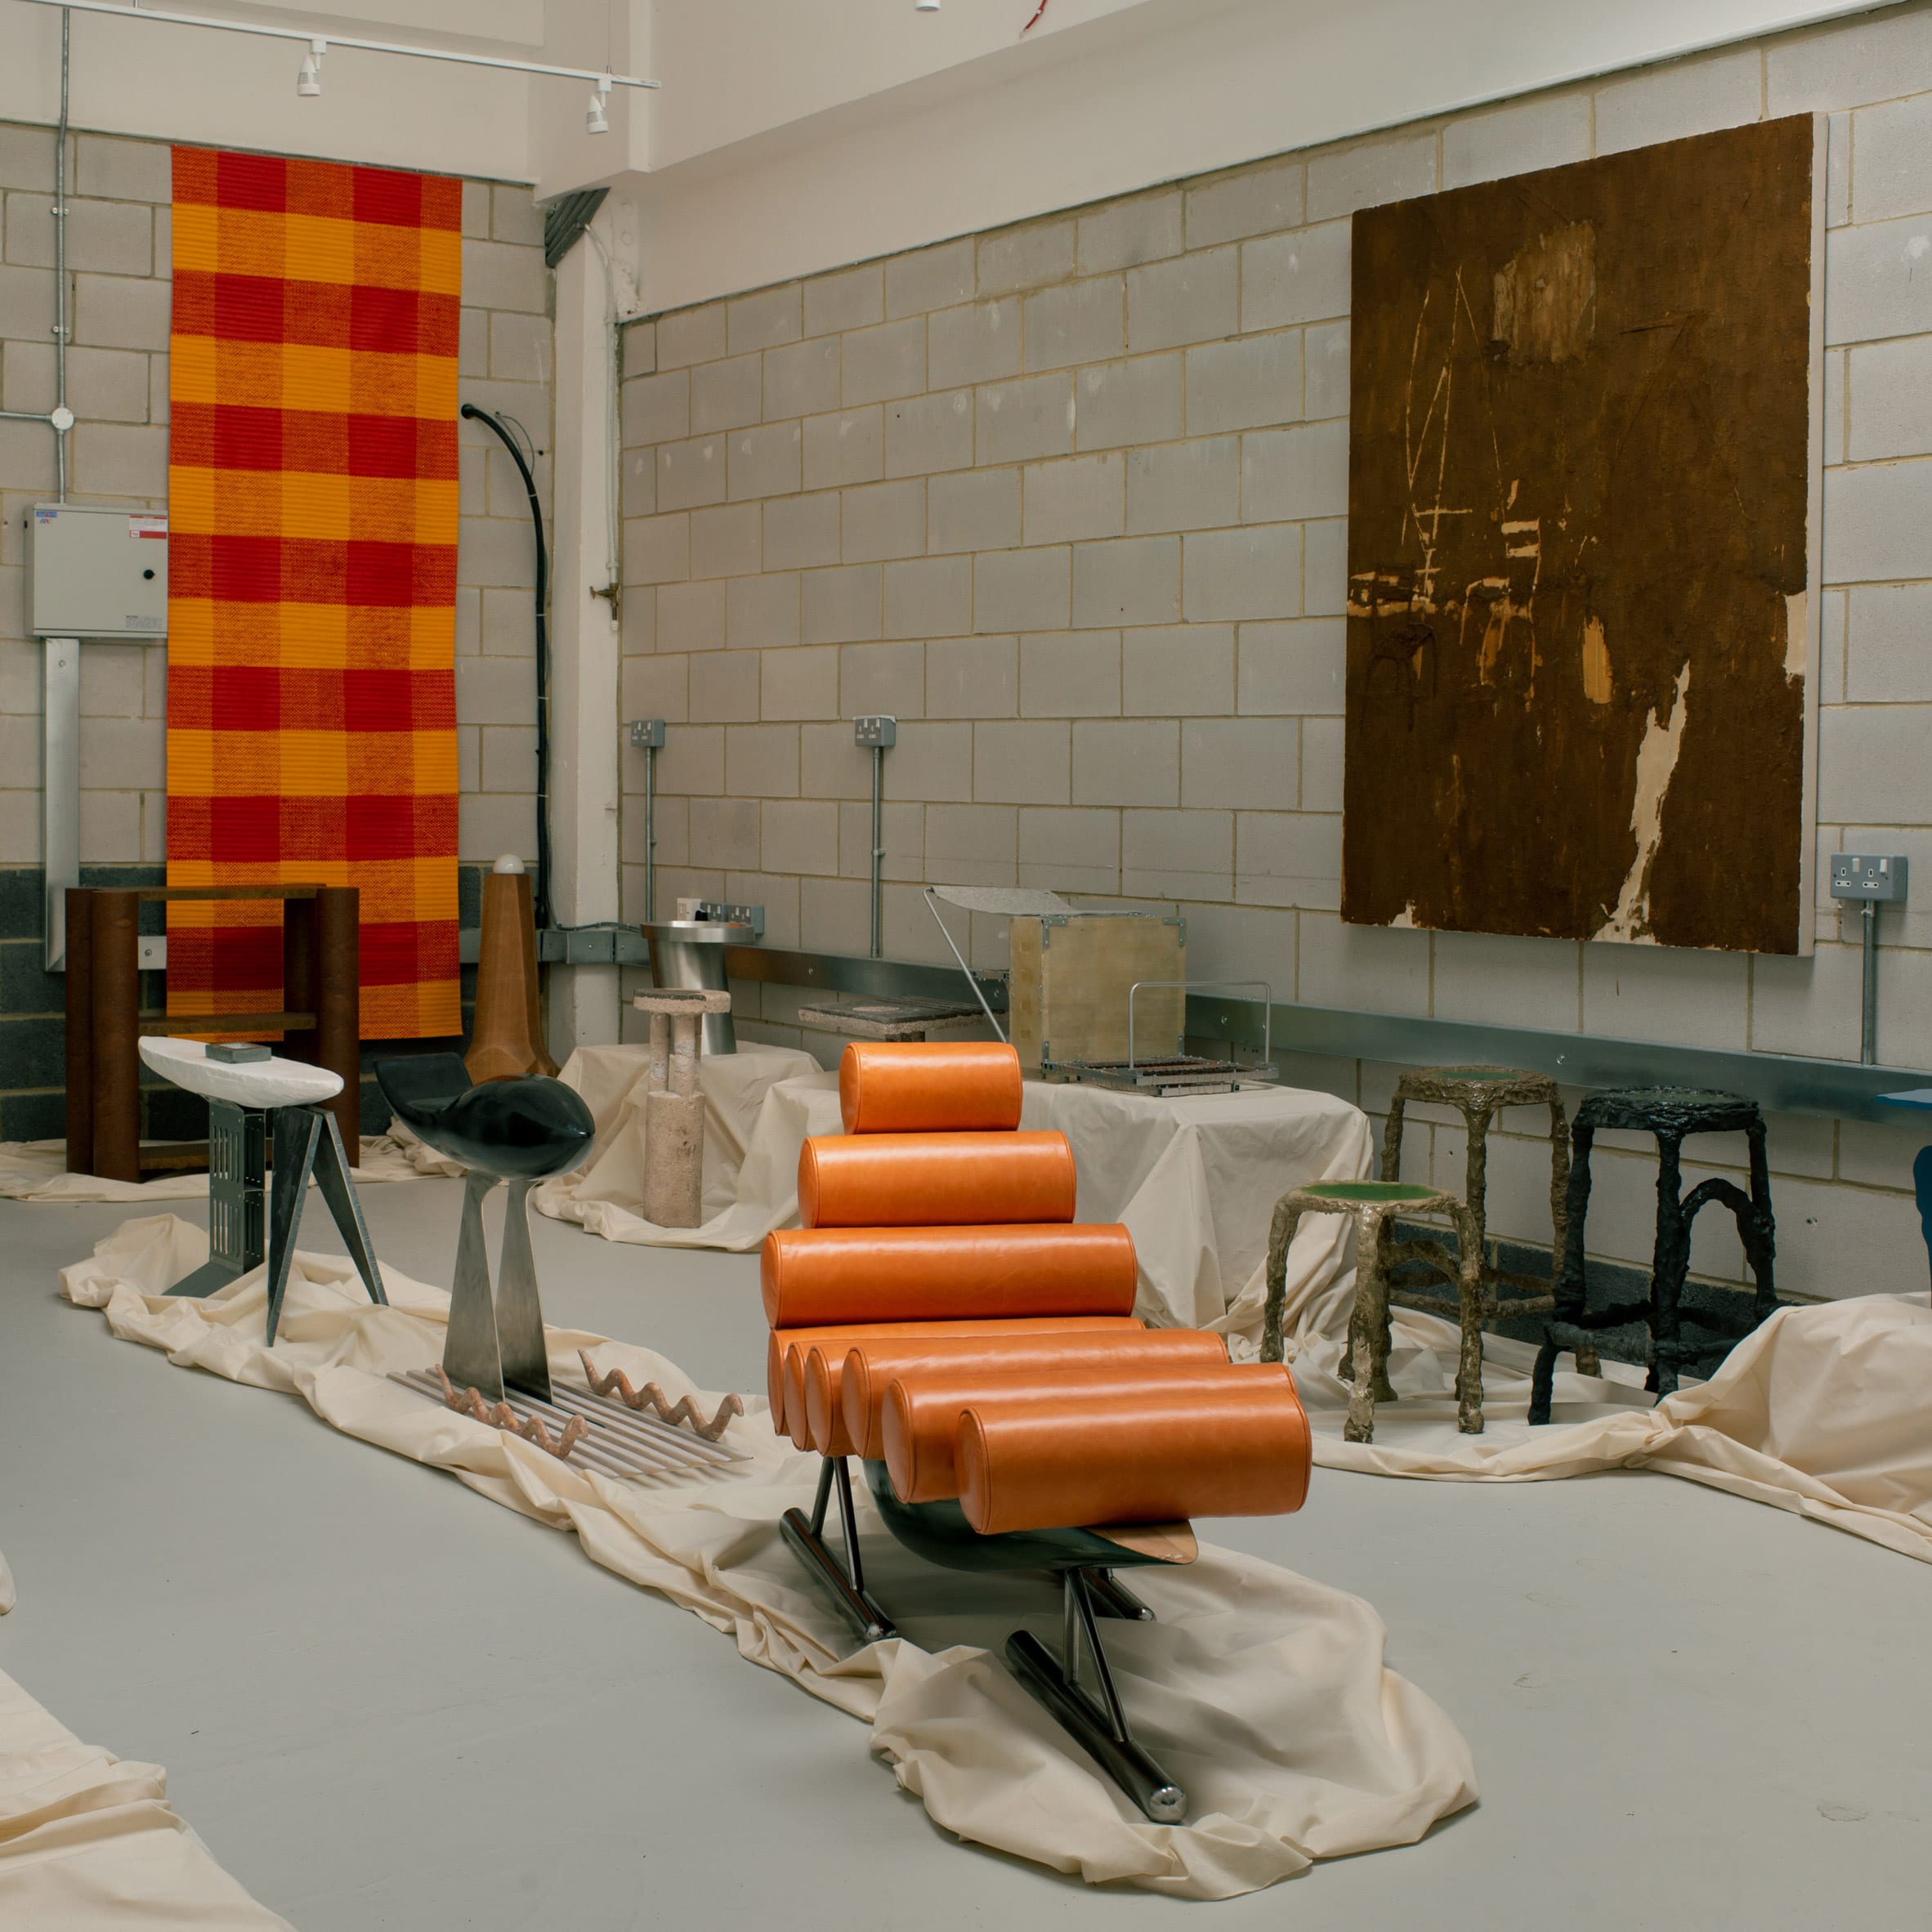 Furniture displayed in a studio space